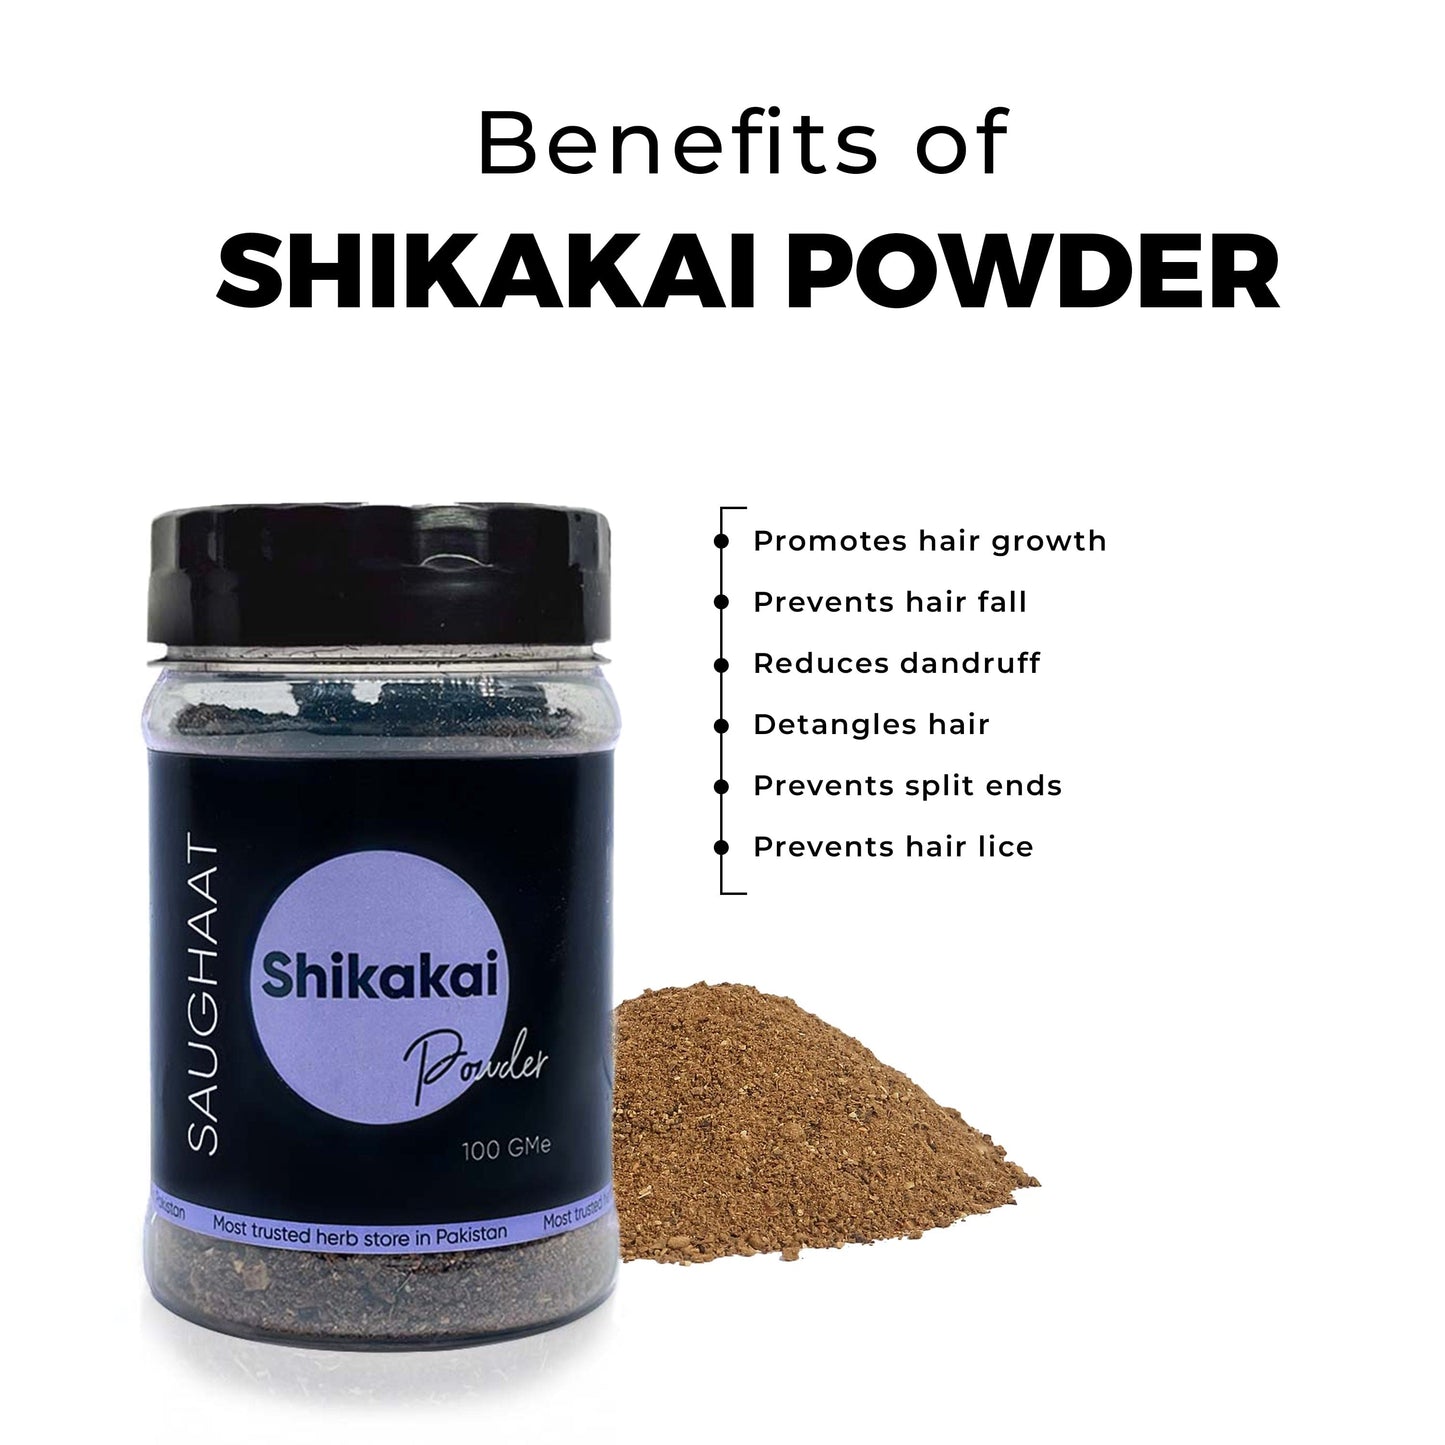 Benefits of Shikakai Powder